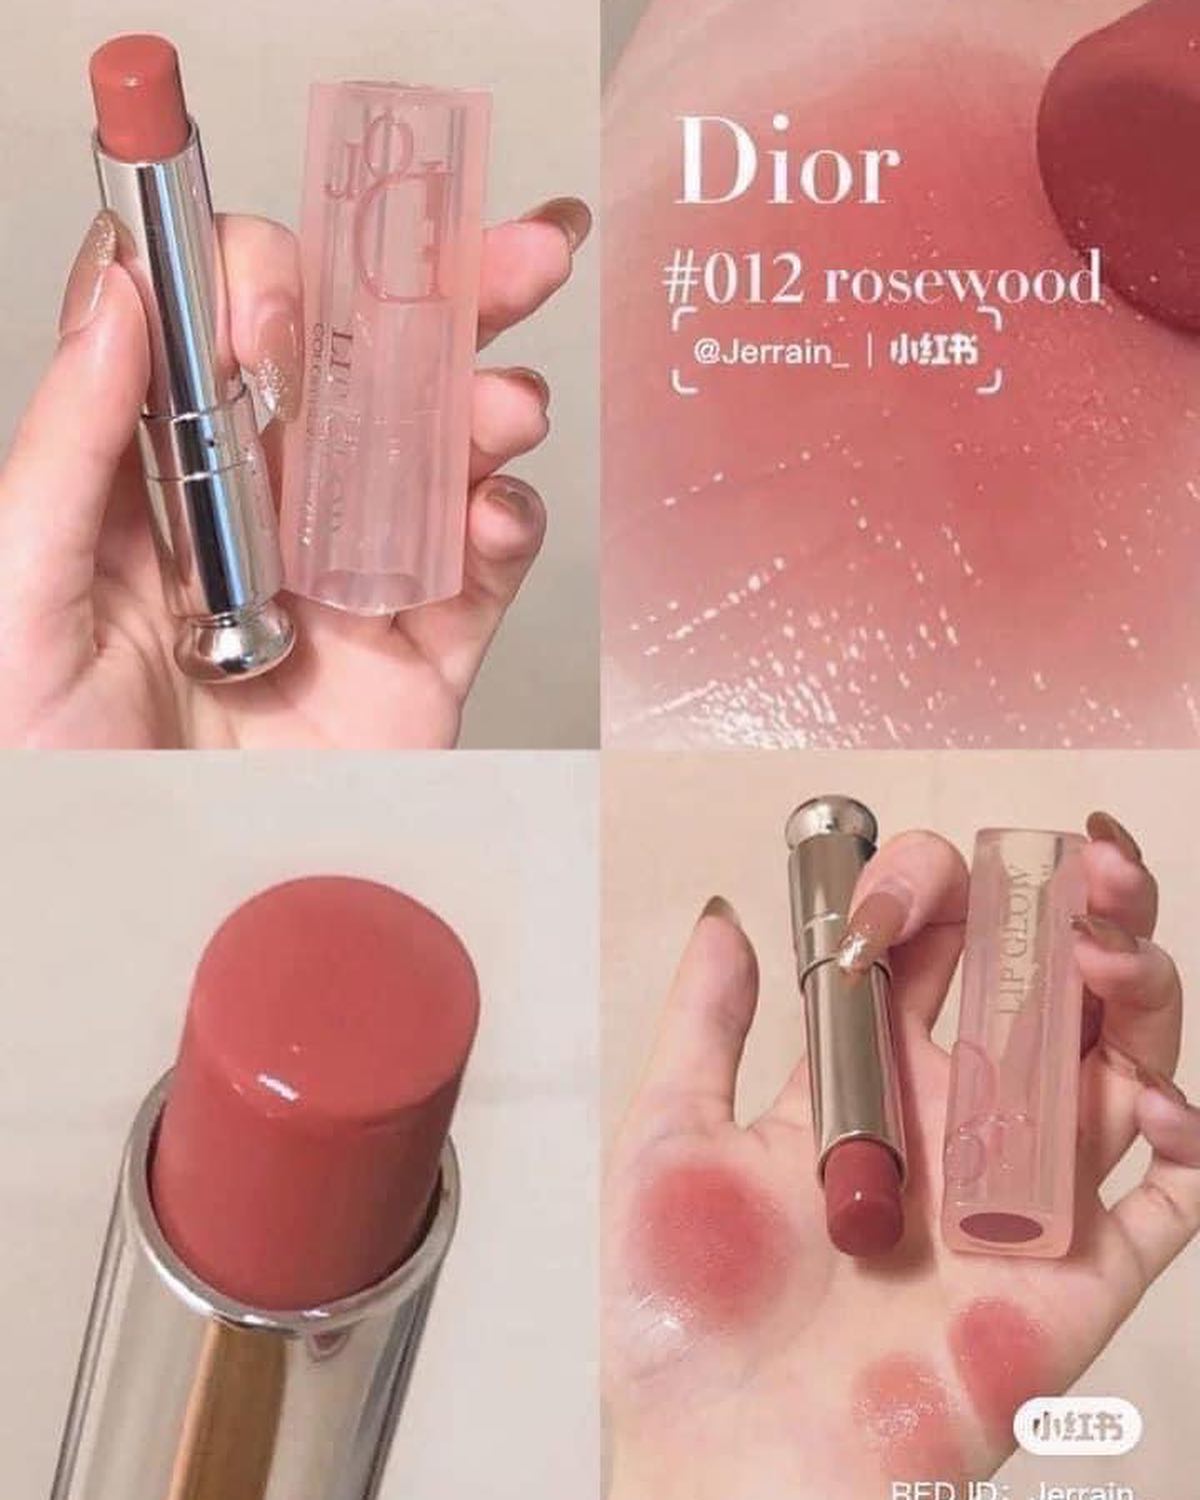 Son Dưỡng Dior Addict Lip Glow Màu 001 Pink  Rosies House